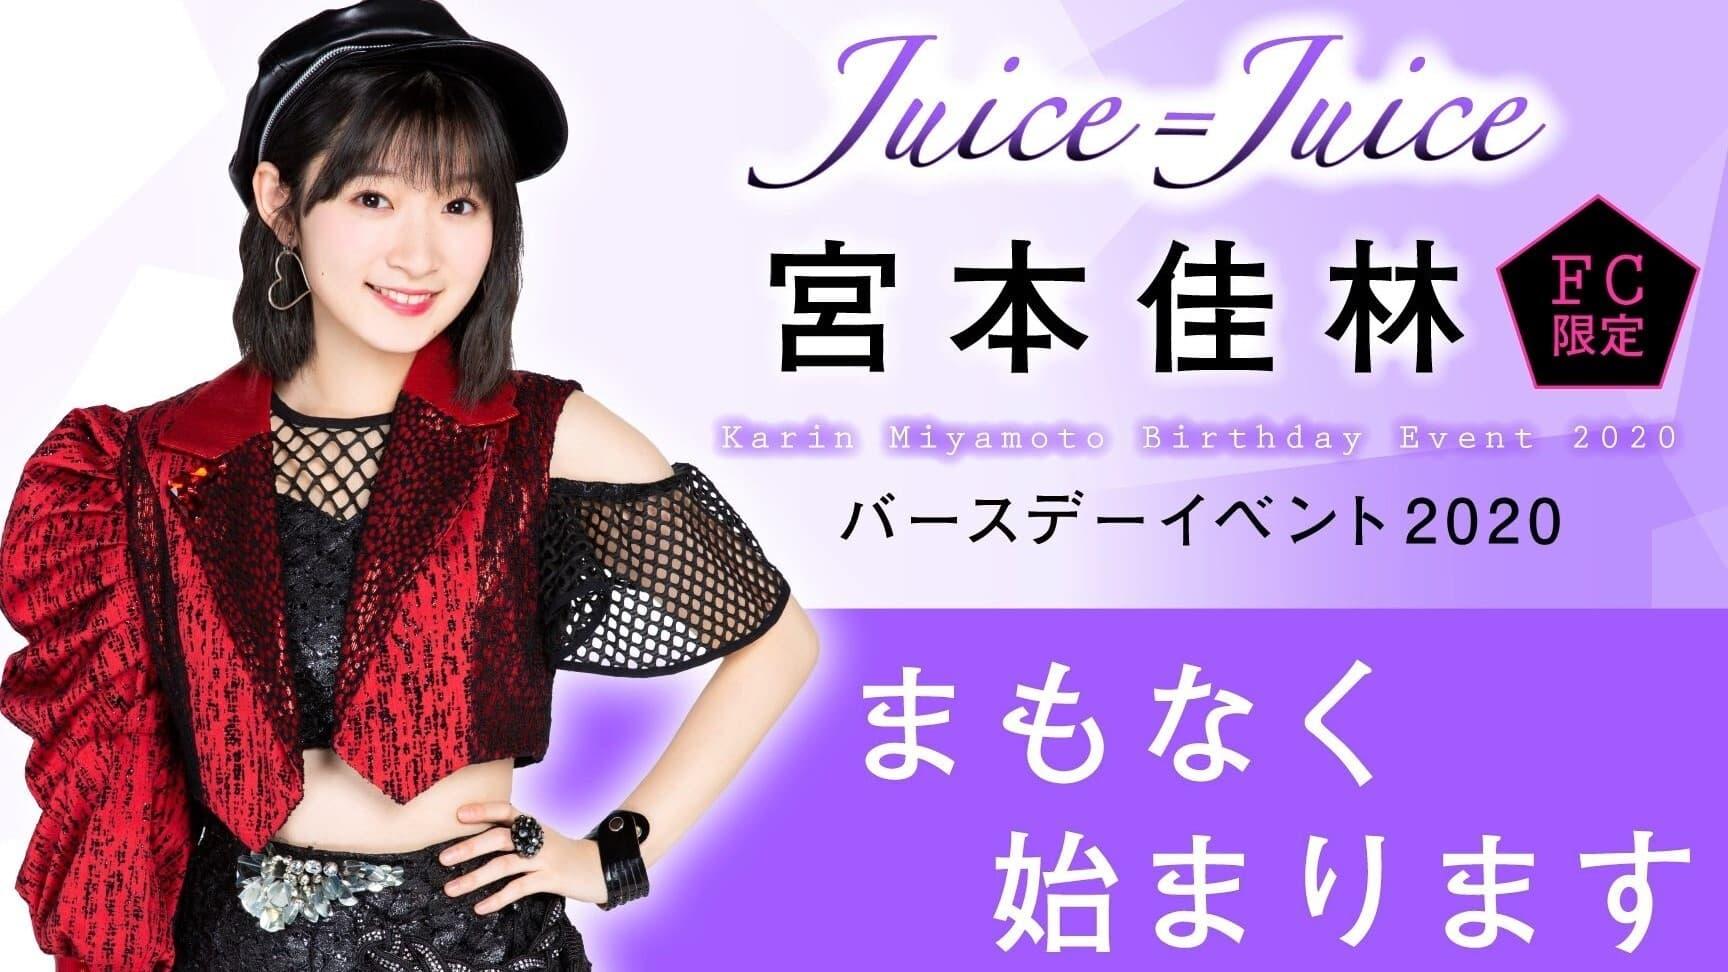 Juice=Juice Miyamoto Karin Birthday Event 2020 backdrop